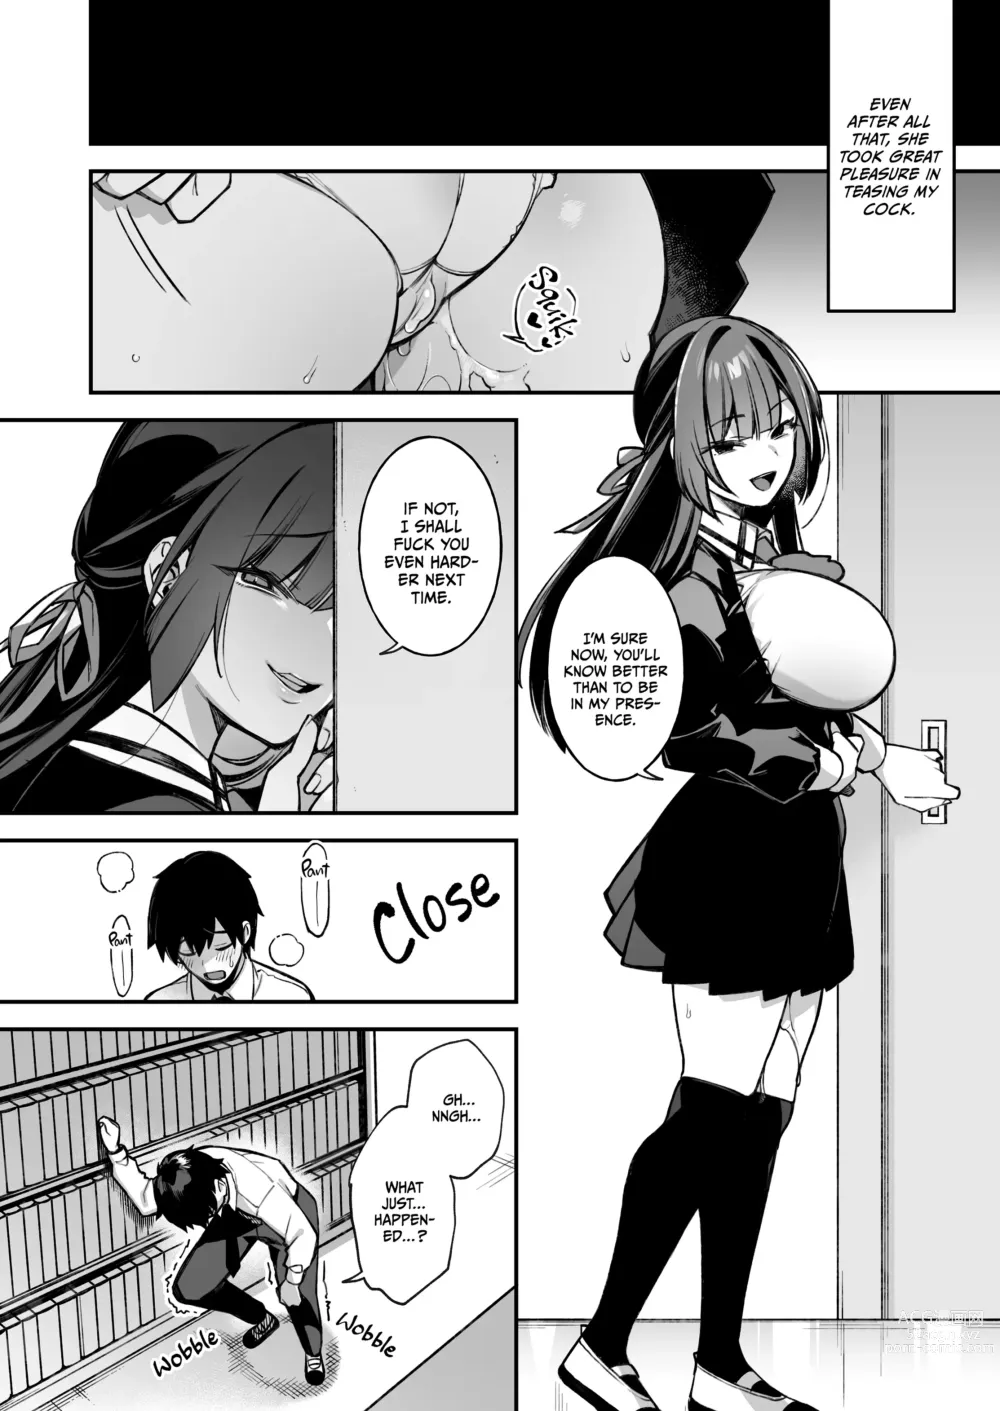 Page 29 of manga Hypnosis 1 (uncensored)